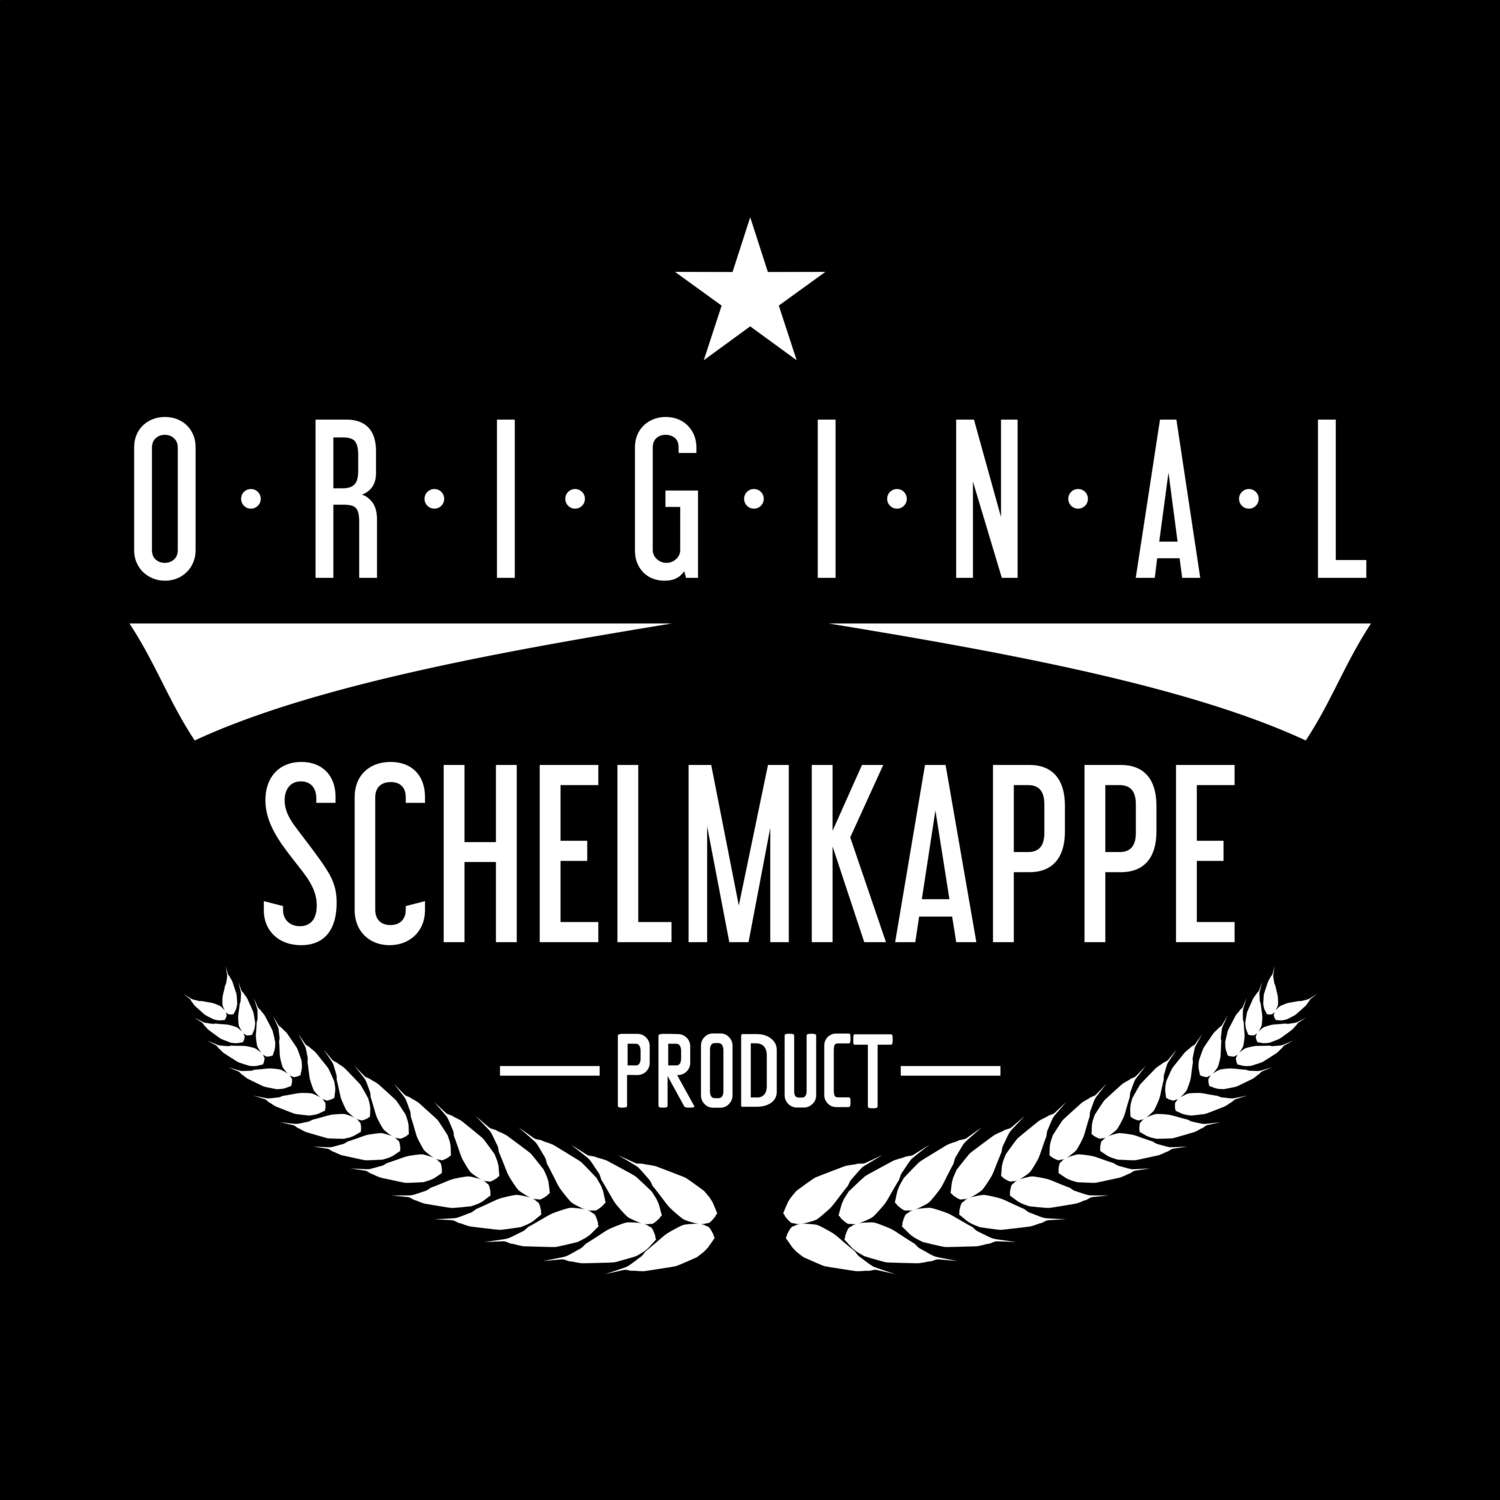 Schelmkappe T-Shirt »Original Product«